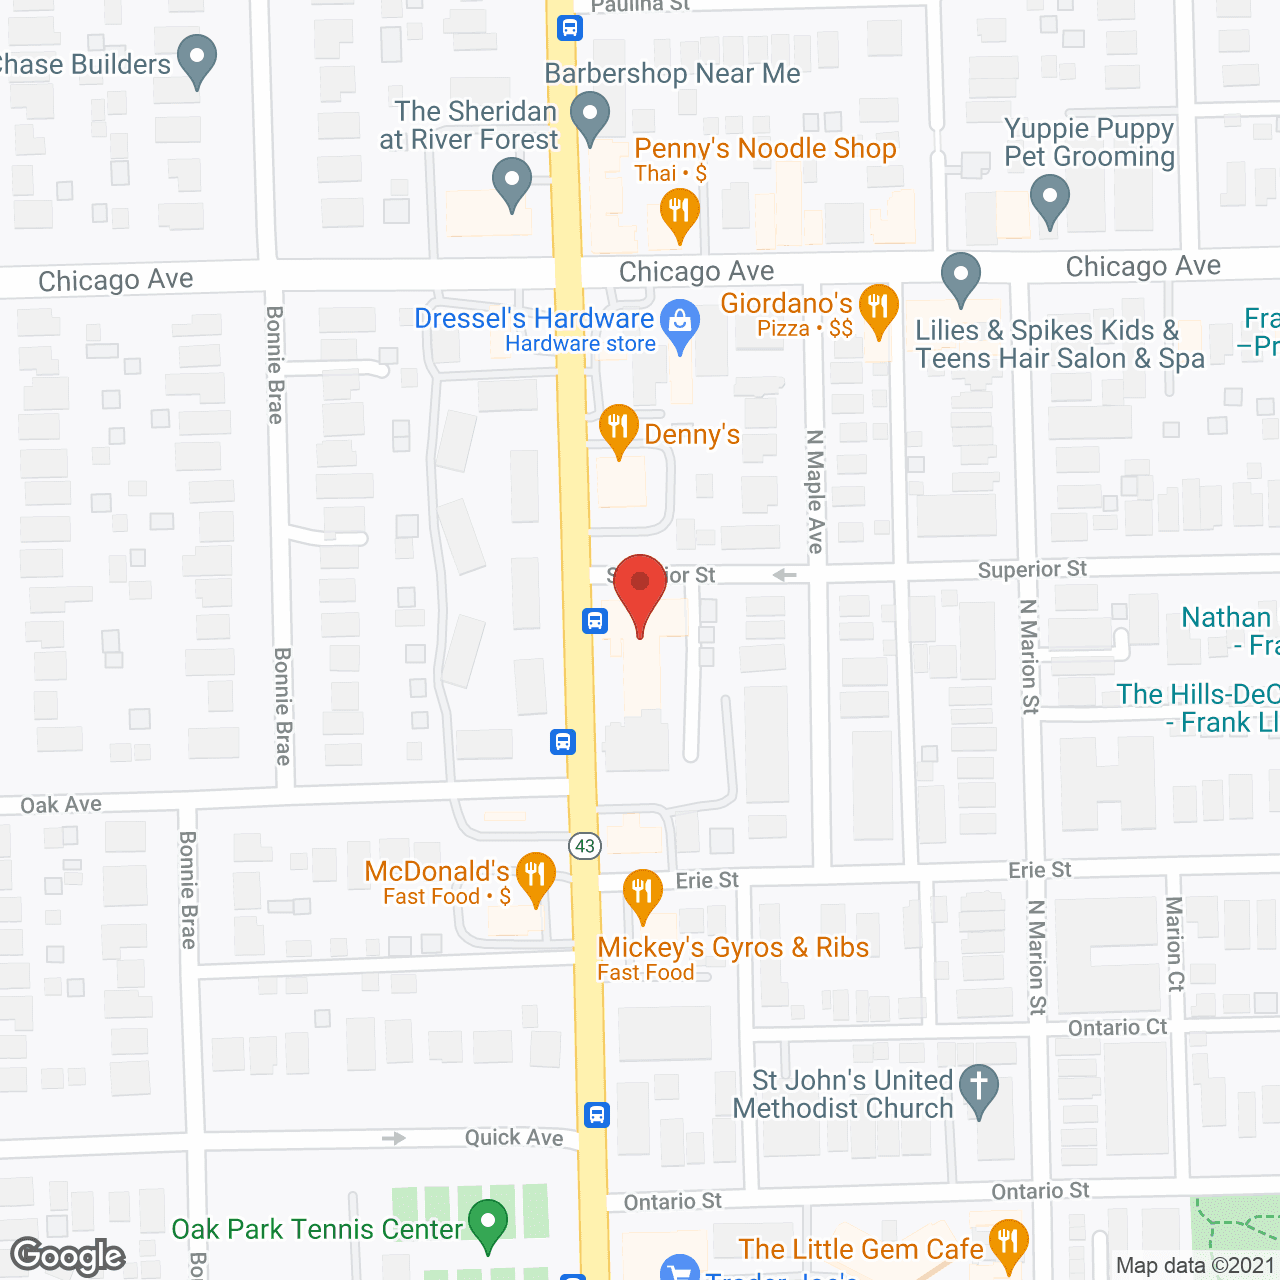 Paramount of Oak Park in google map